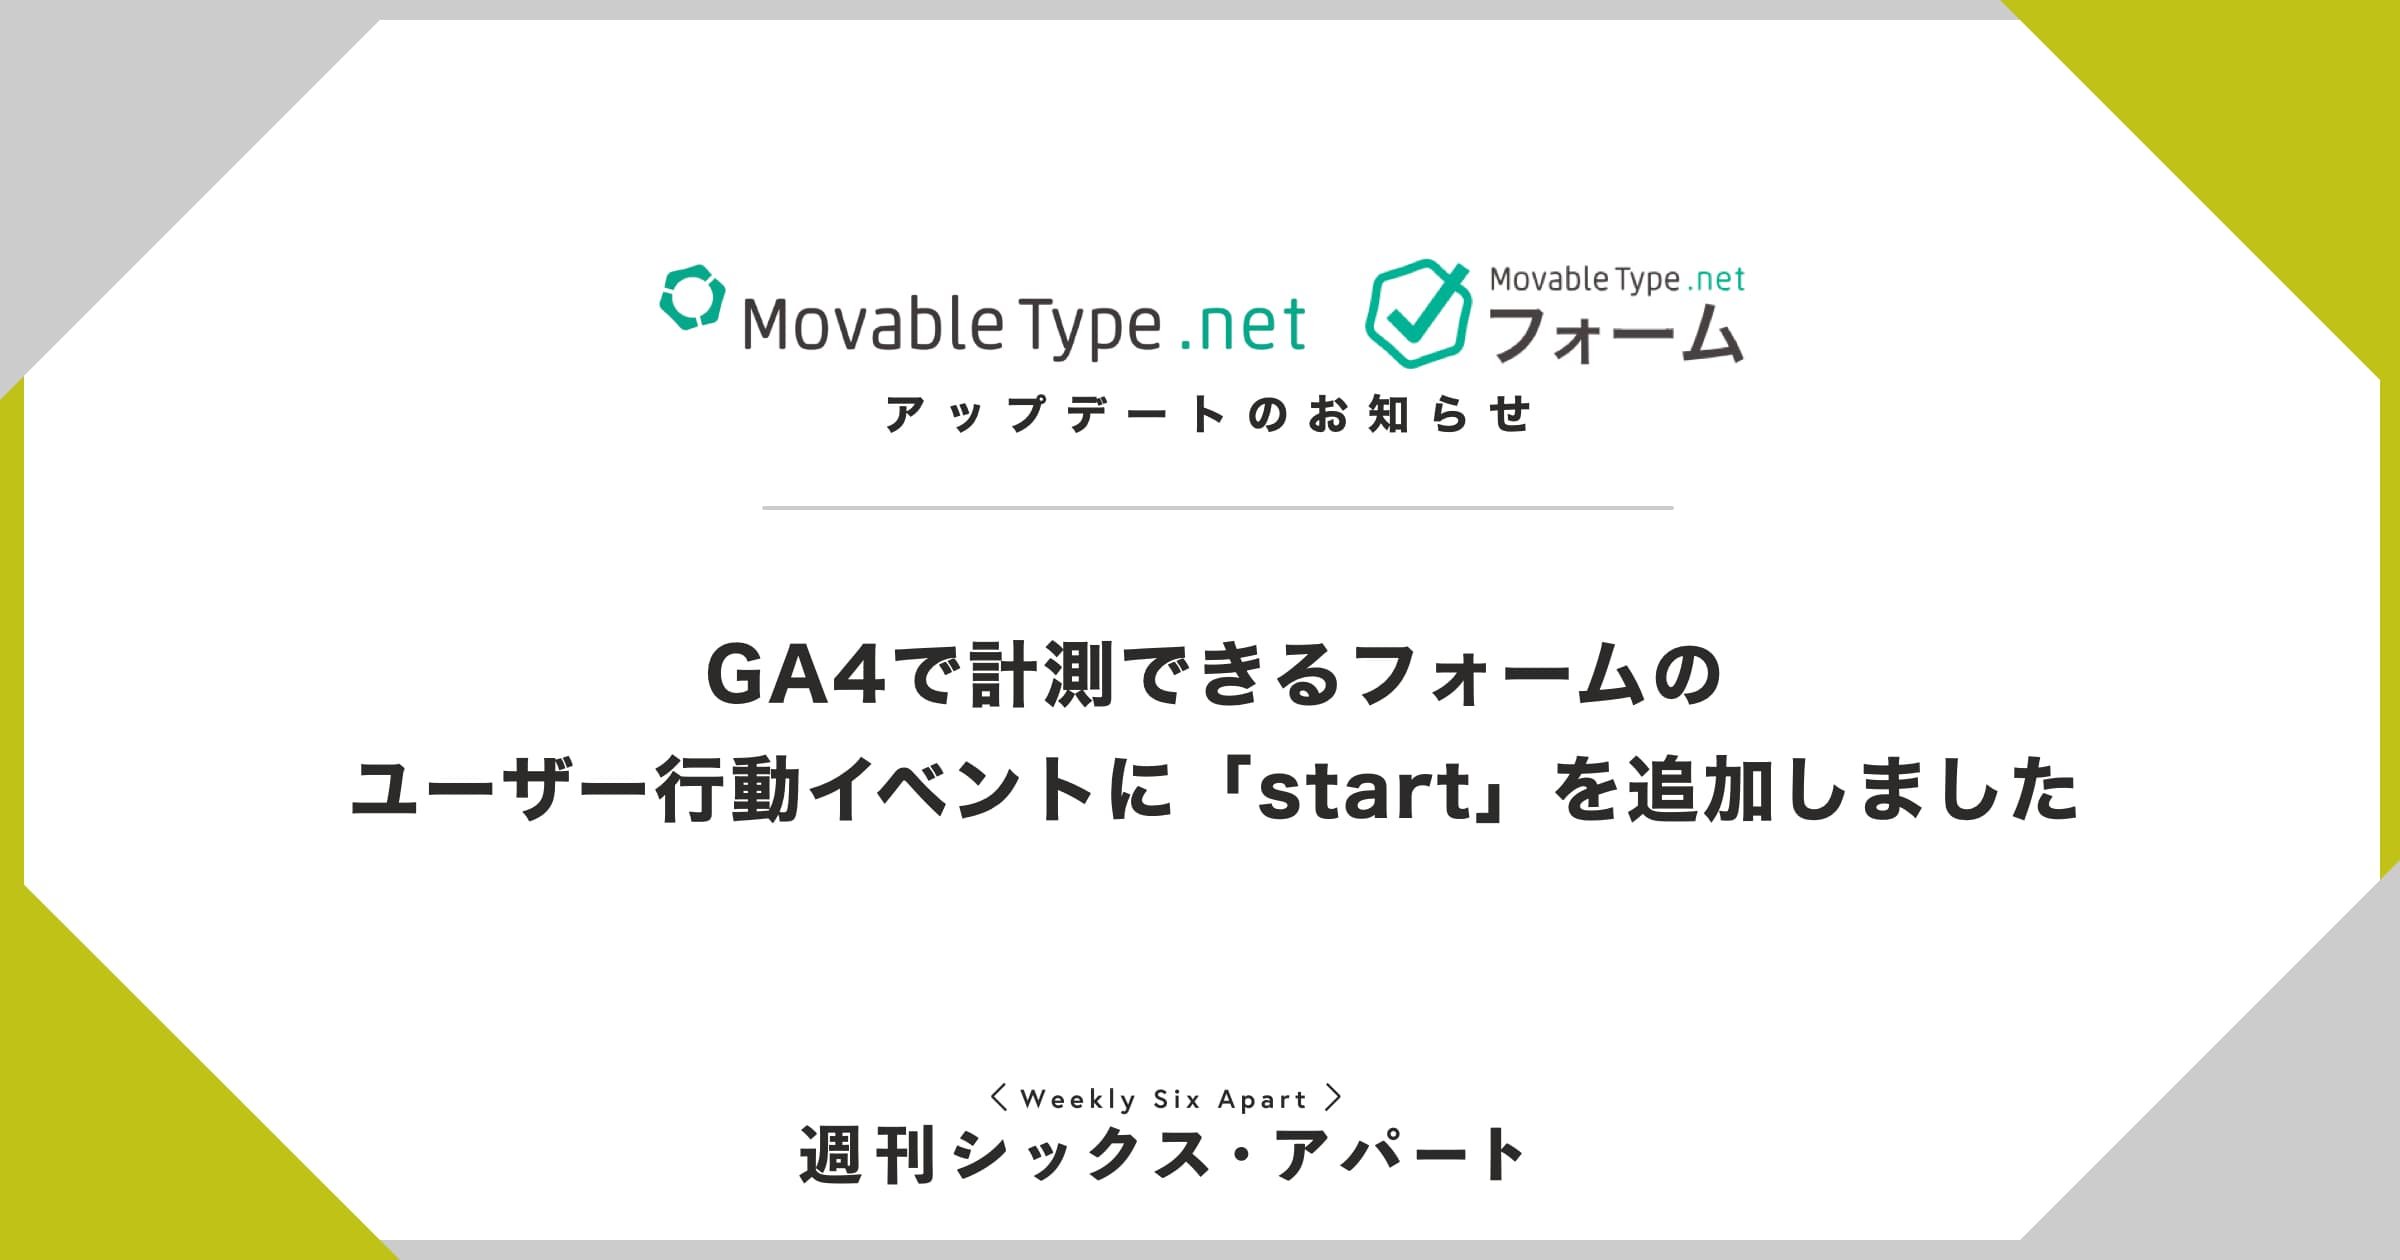 【MovableType.net】GA4で計測できるフォームのユーザー行動イベントに「start」を追加しました #週刊SA